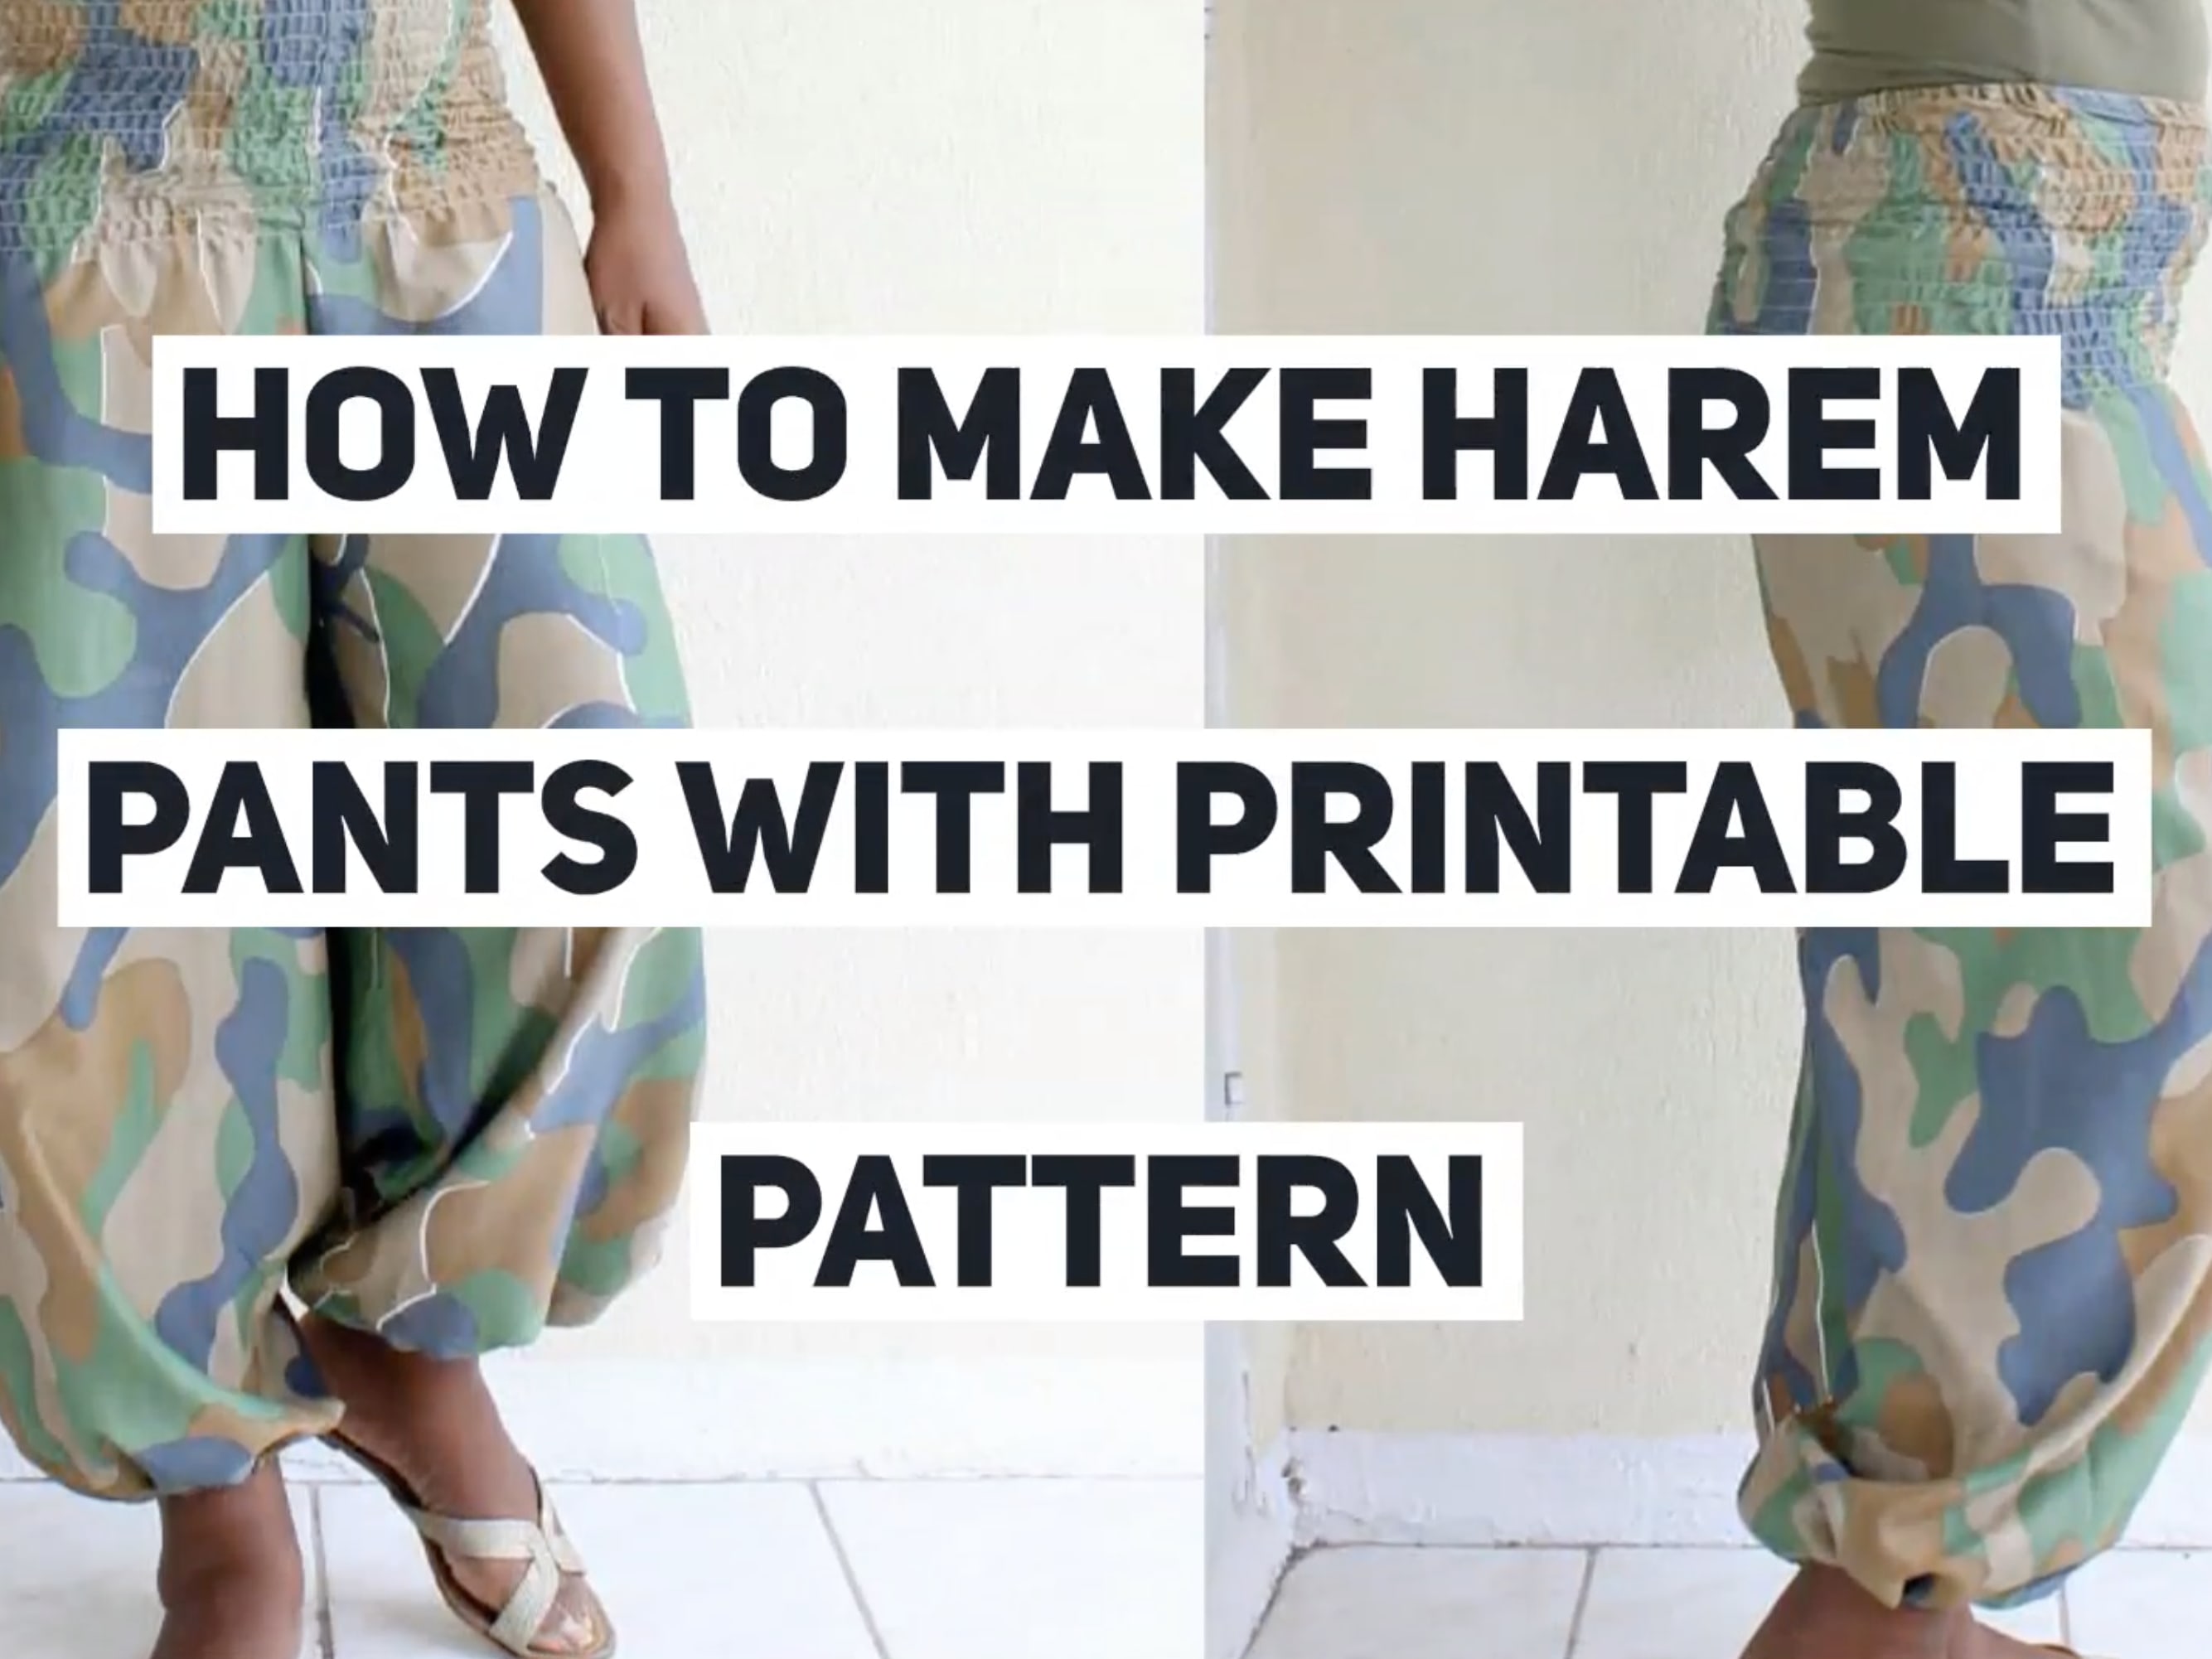 HOW TO MAKE HAREM PANTS PATTERN  PATTERN MAKING TUTORIAL  YouTube